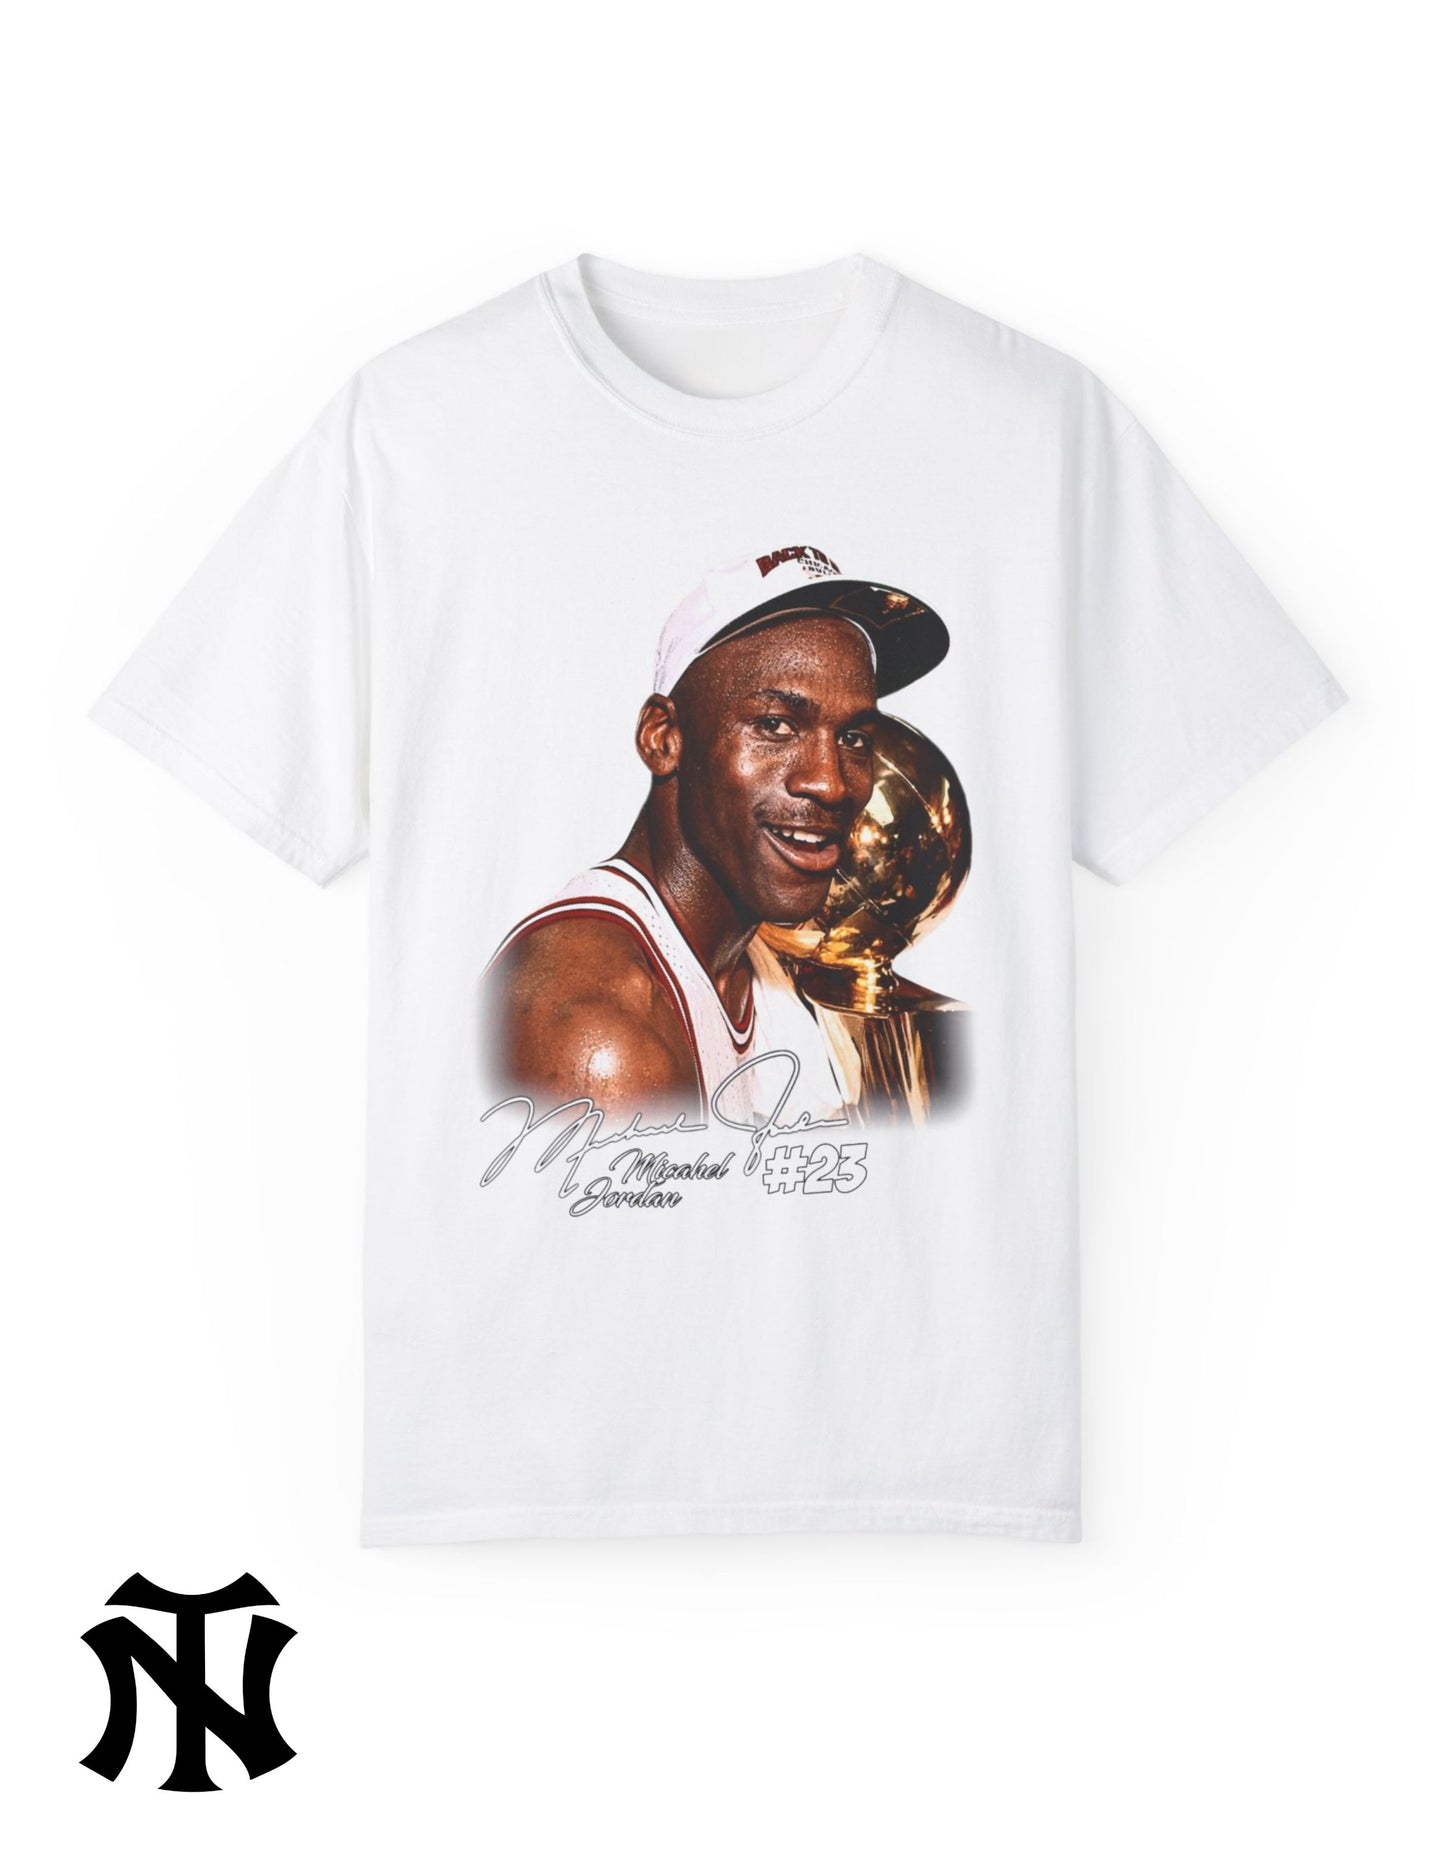 Michael Jordan Legacy Graphic Shirt